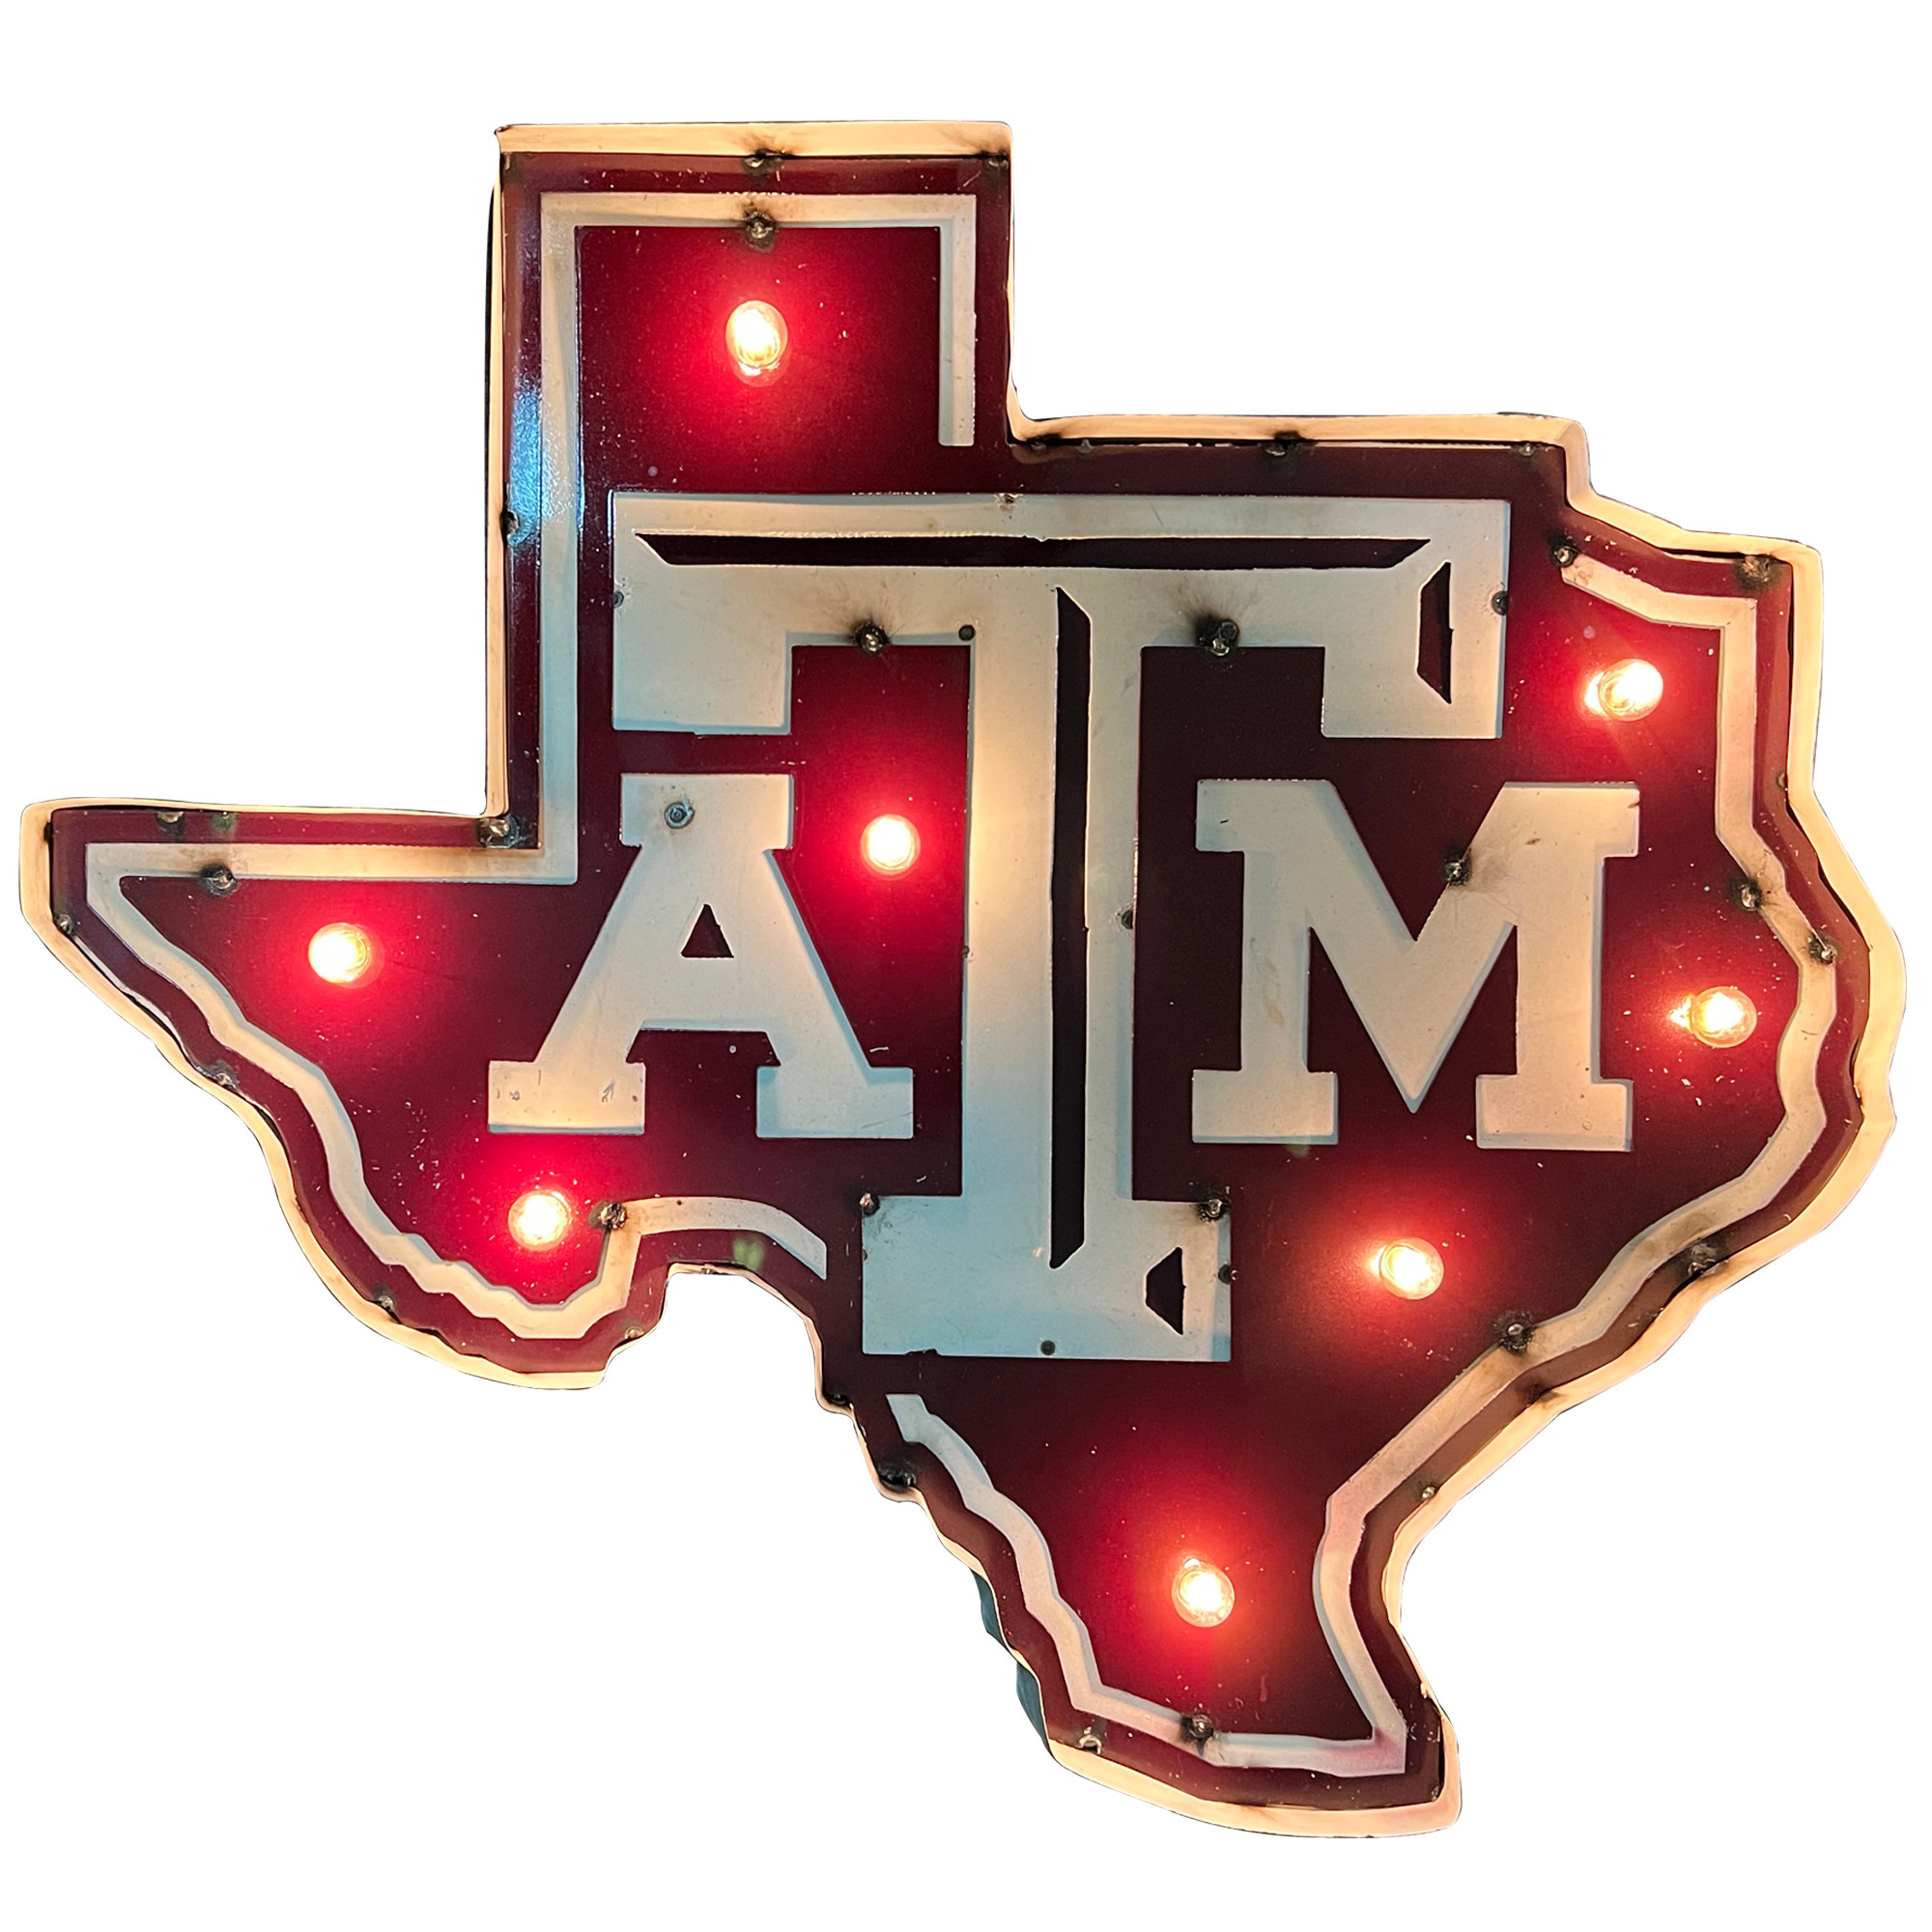 Texas A&M Aggies Logo 18'' Round Slimline Illuminated Wall Sign